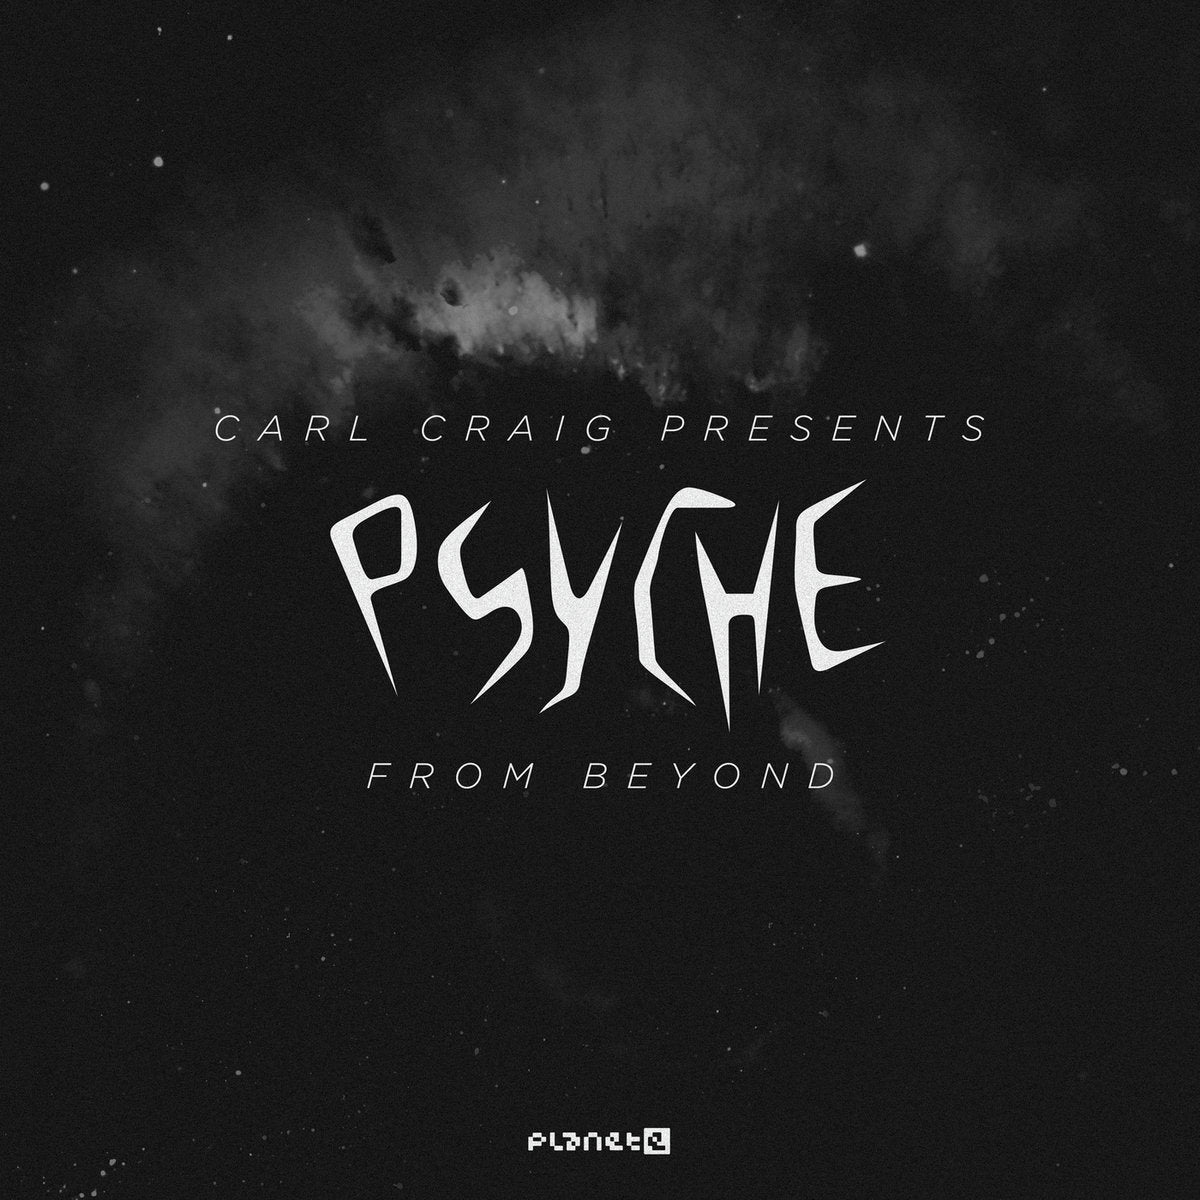 Carl Craig Presents: Psyche - From Beyond (Seth Troxler, Ataxia, Admn Remixes) [Planet E]